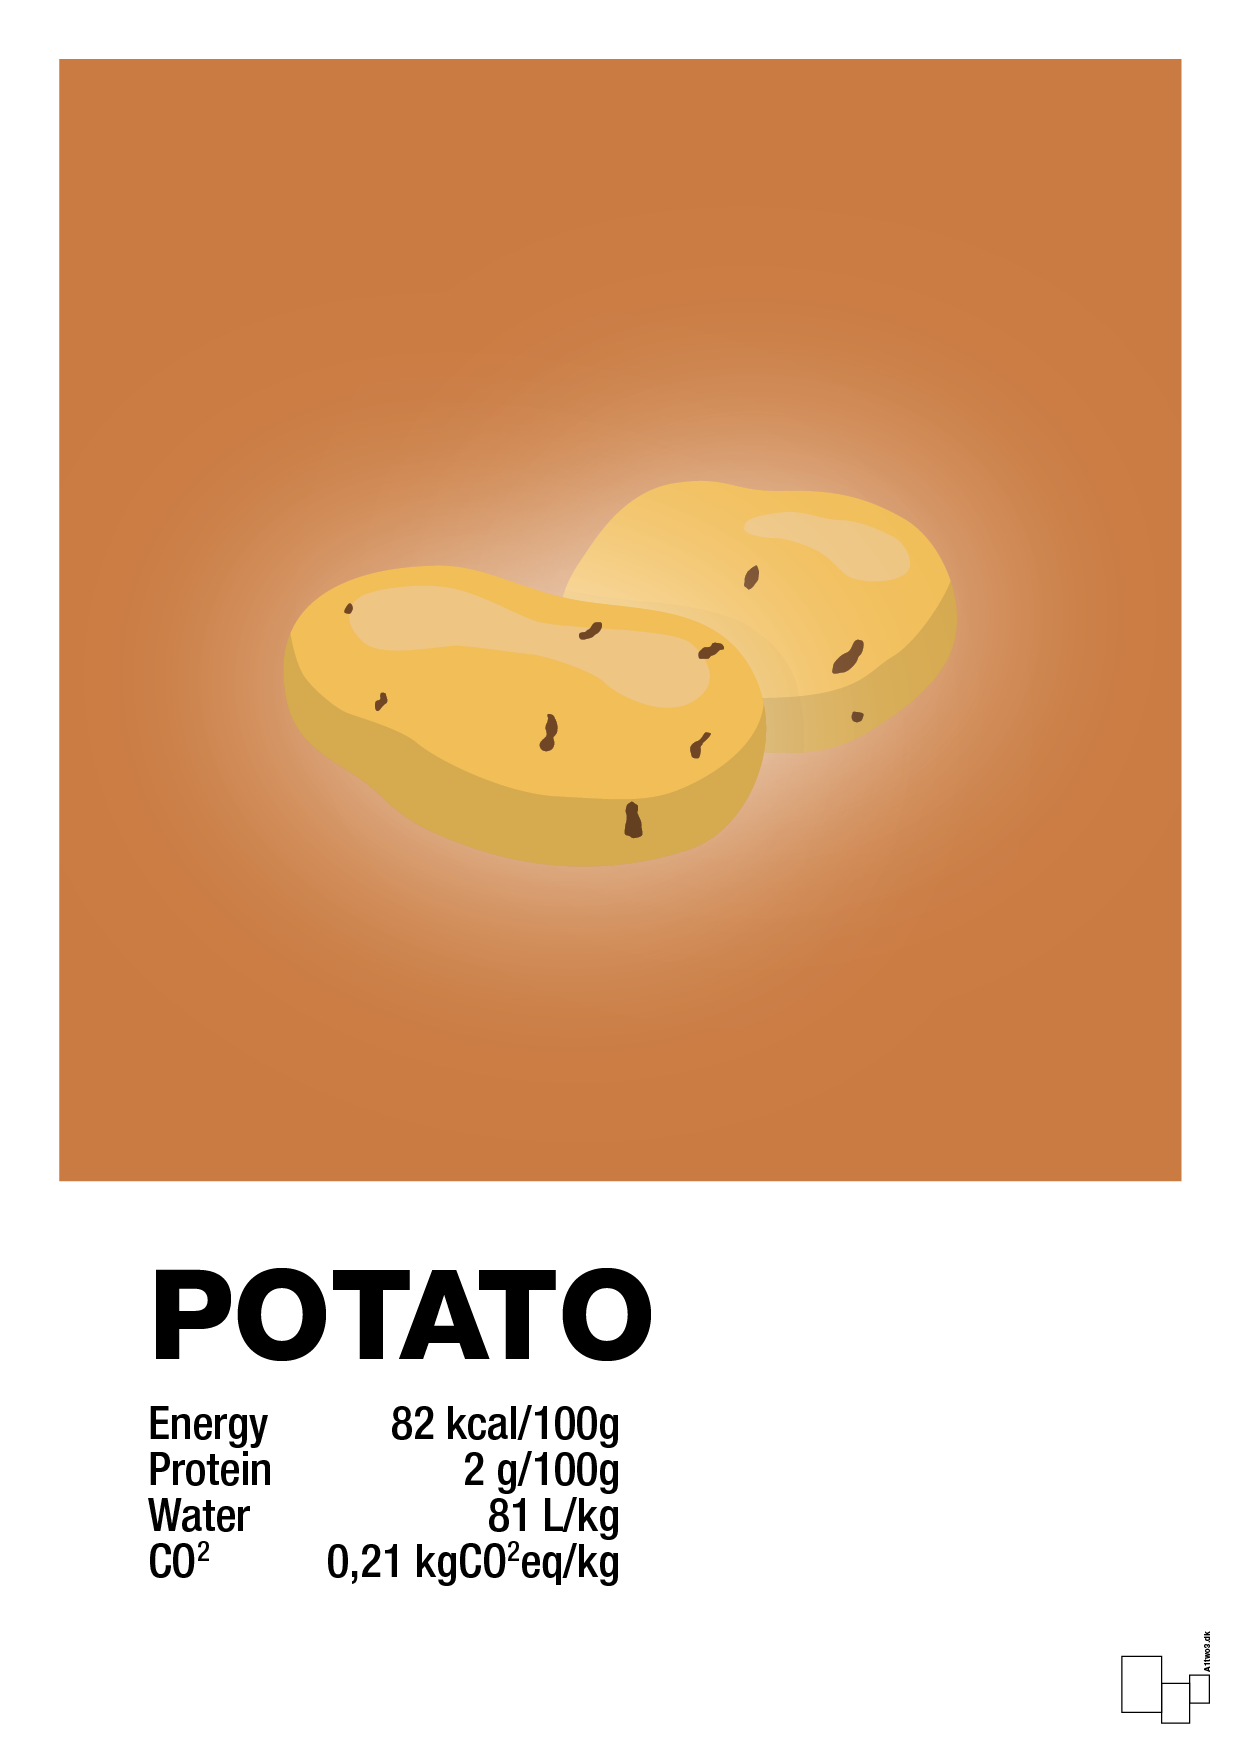 potato nutrition og miljø - Plakat med Mad & Drikke i Rumba Orange